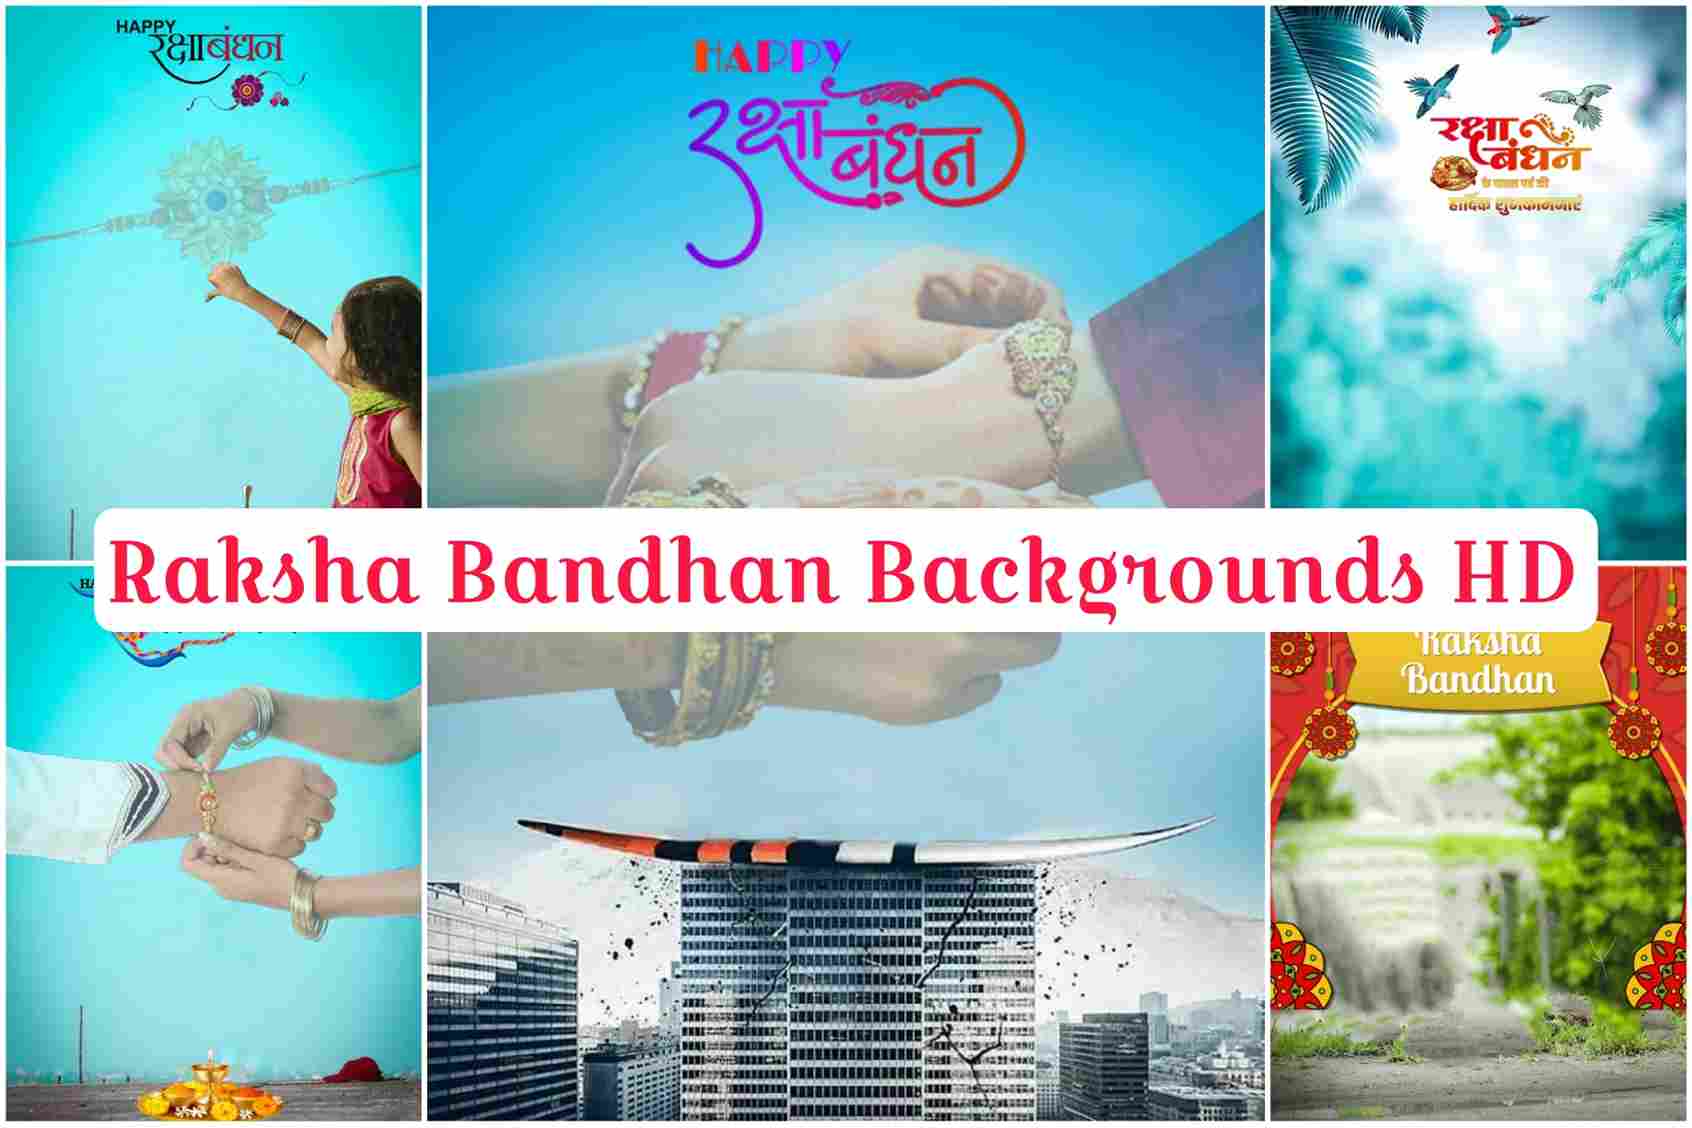 Happy Raksha Bandhan Backgrounds Hd for Editing Download